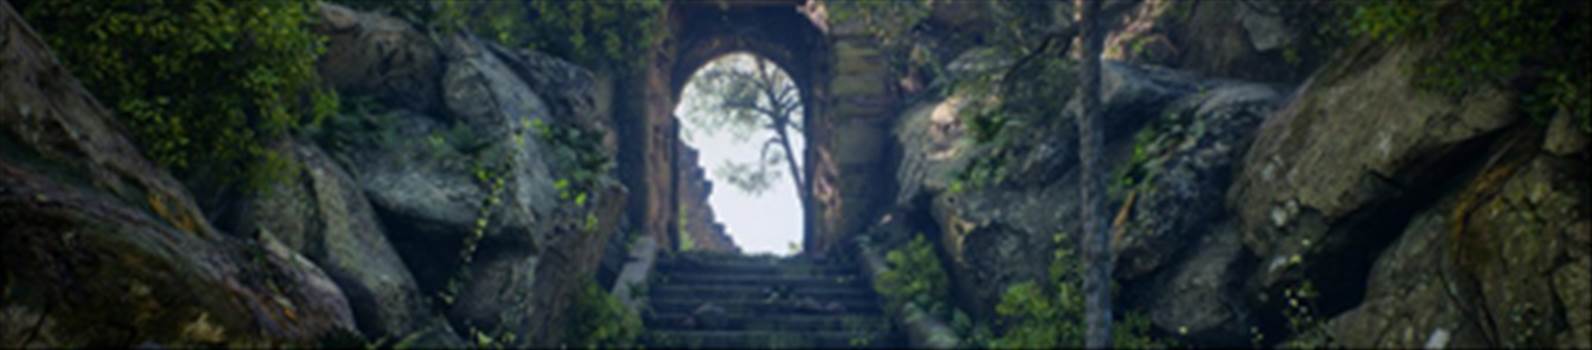 teronna-labyrinth.jpg - 